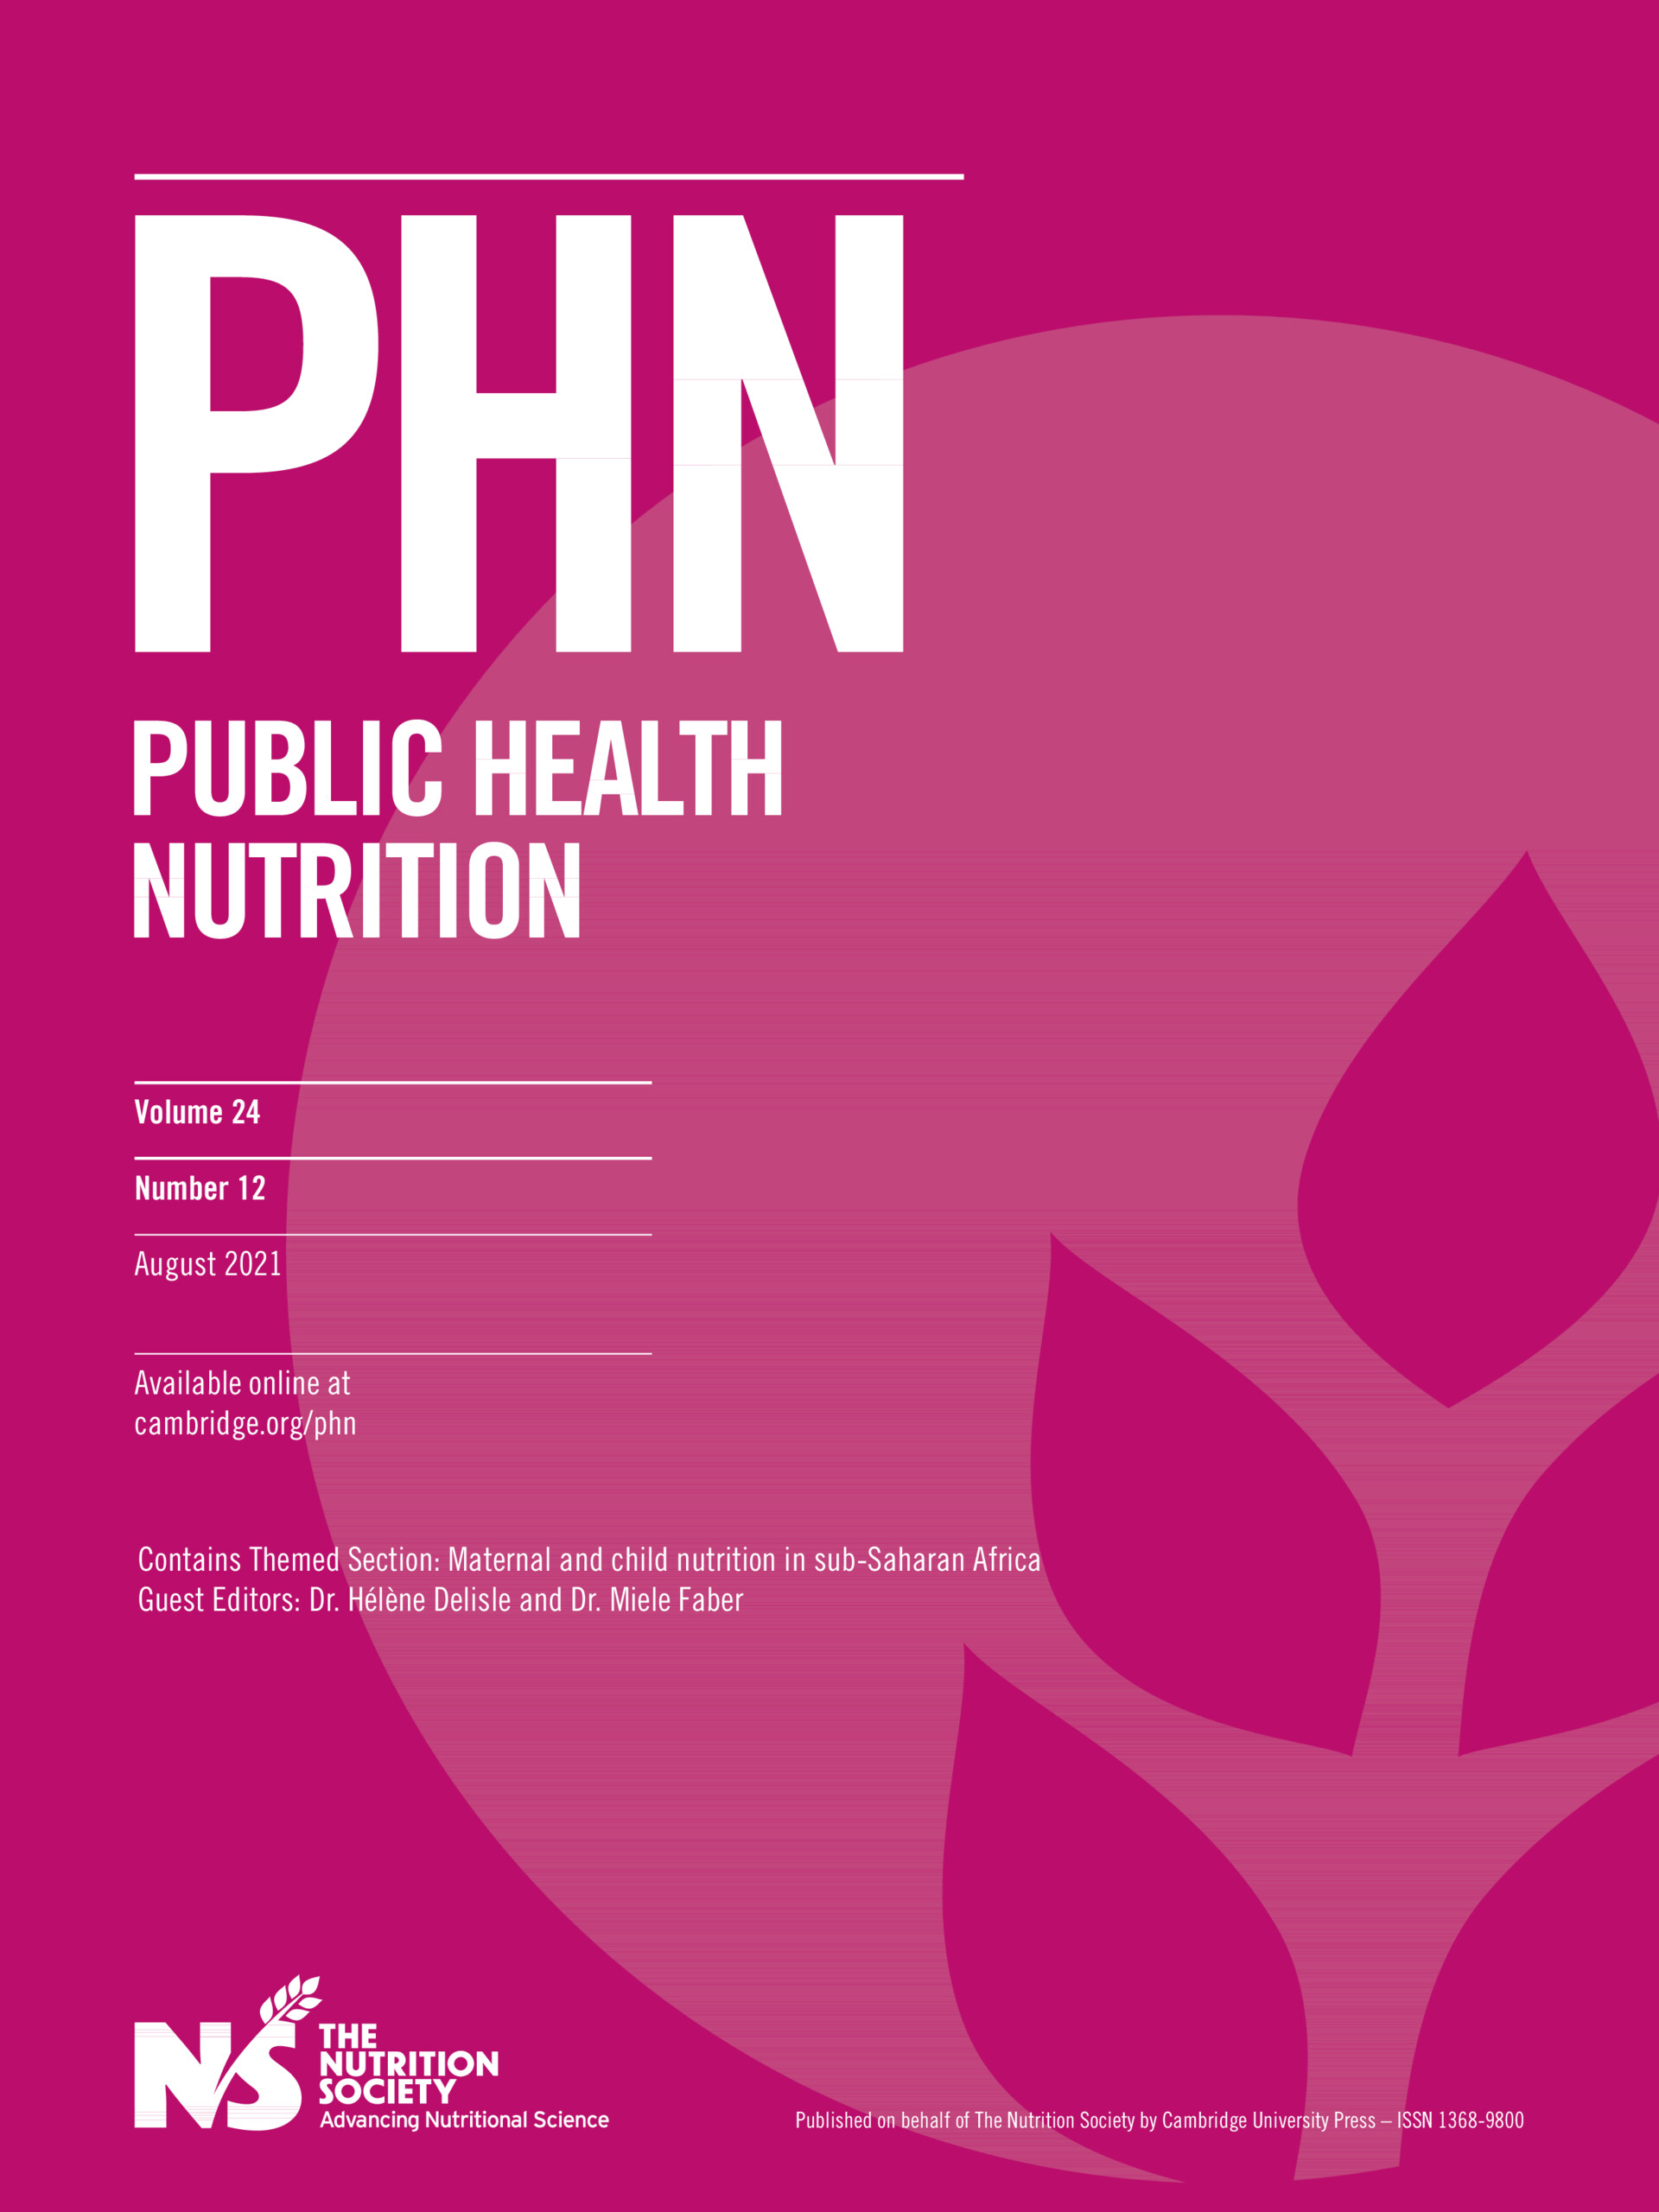 phd public health nutrition uk